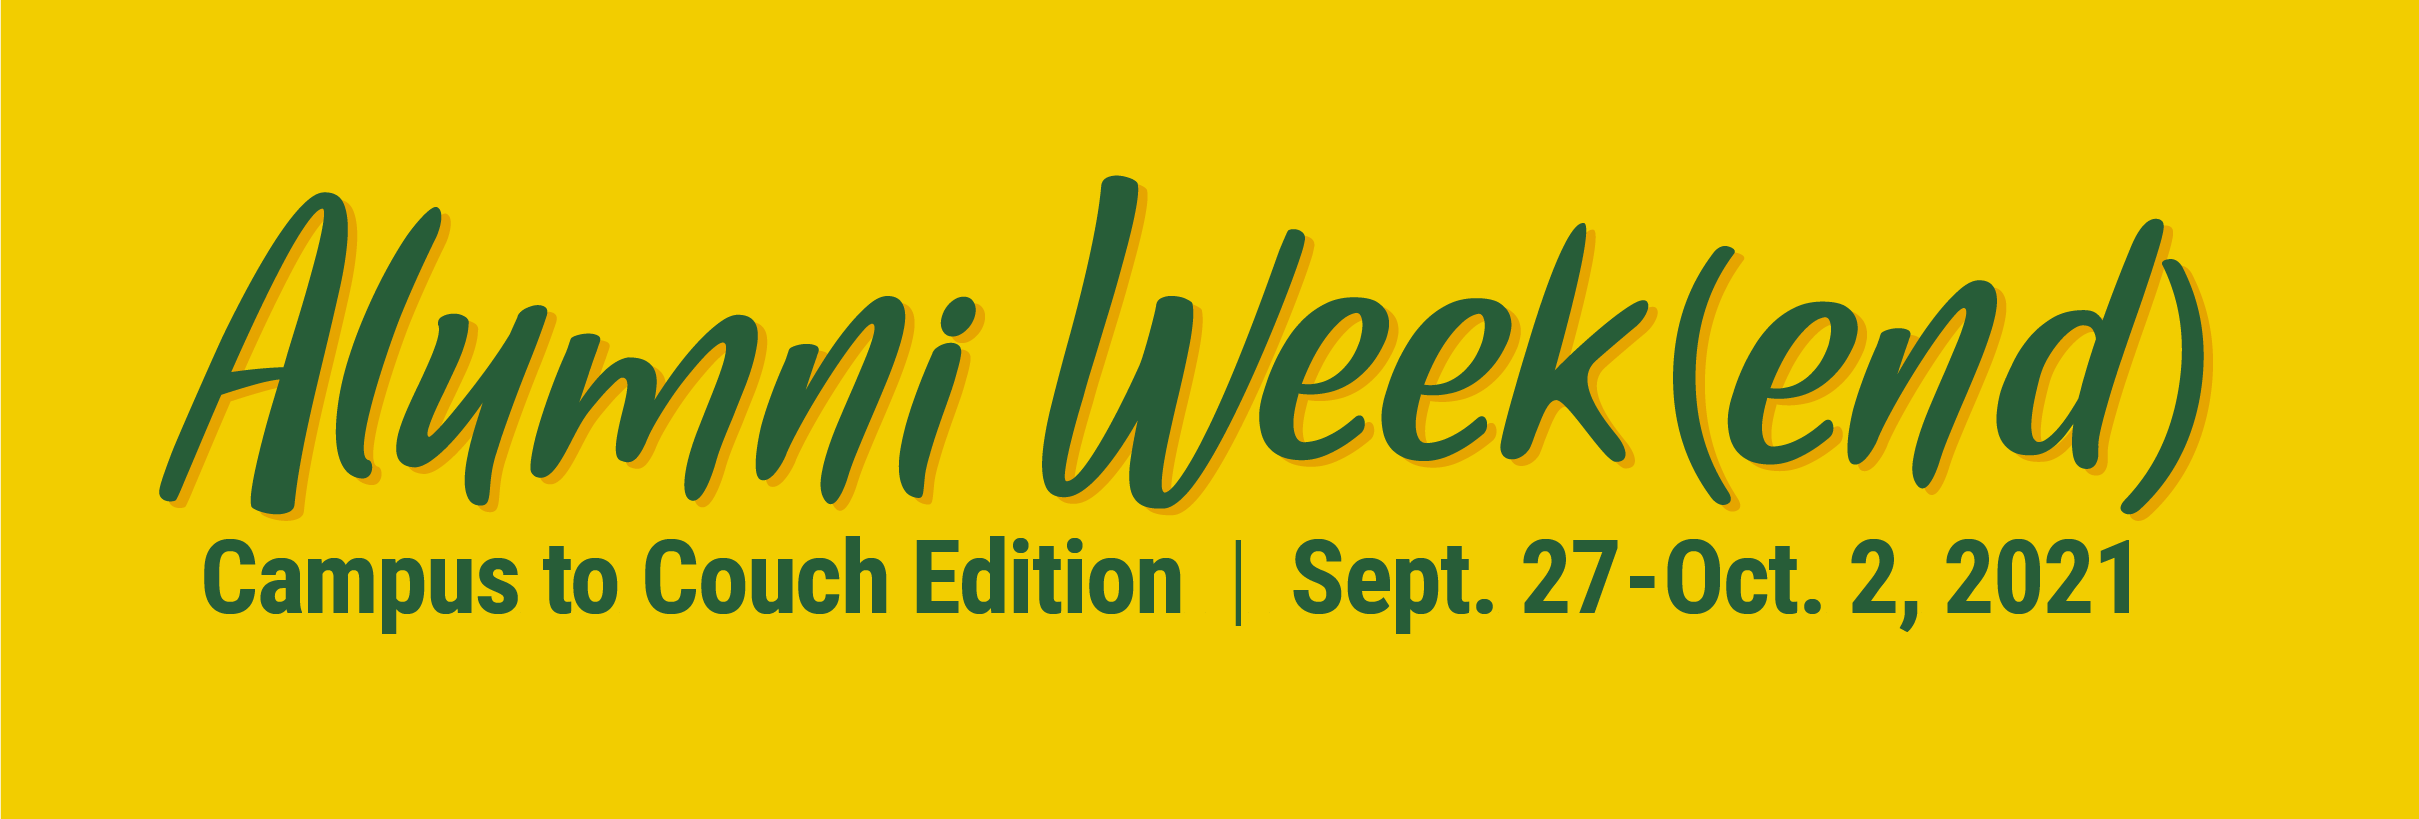 Alumni Week(end) Sept. 27 to Oct. 2, 2021